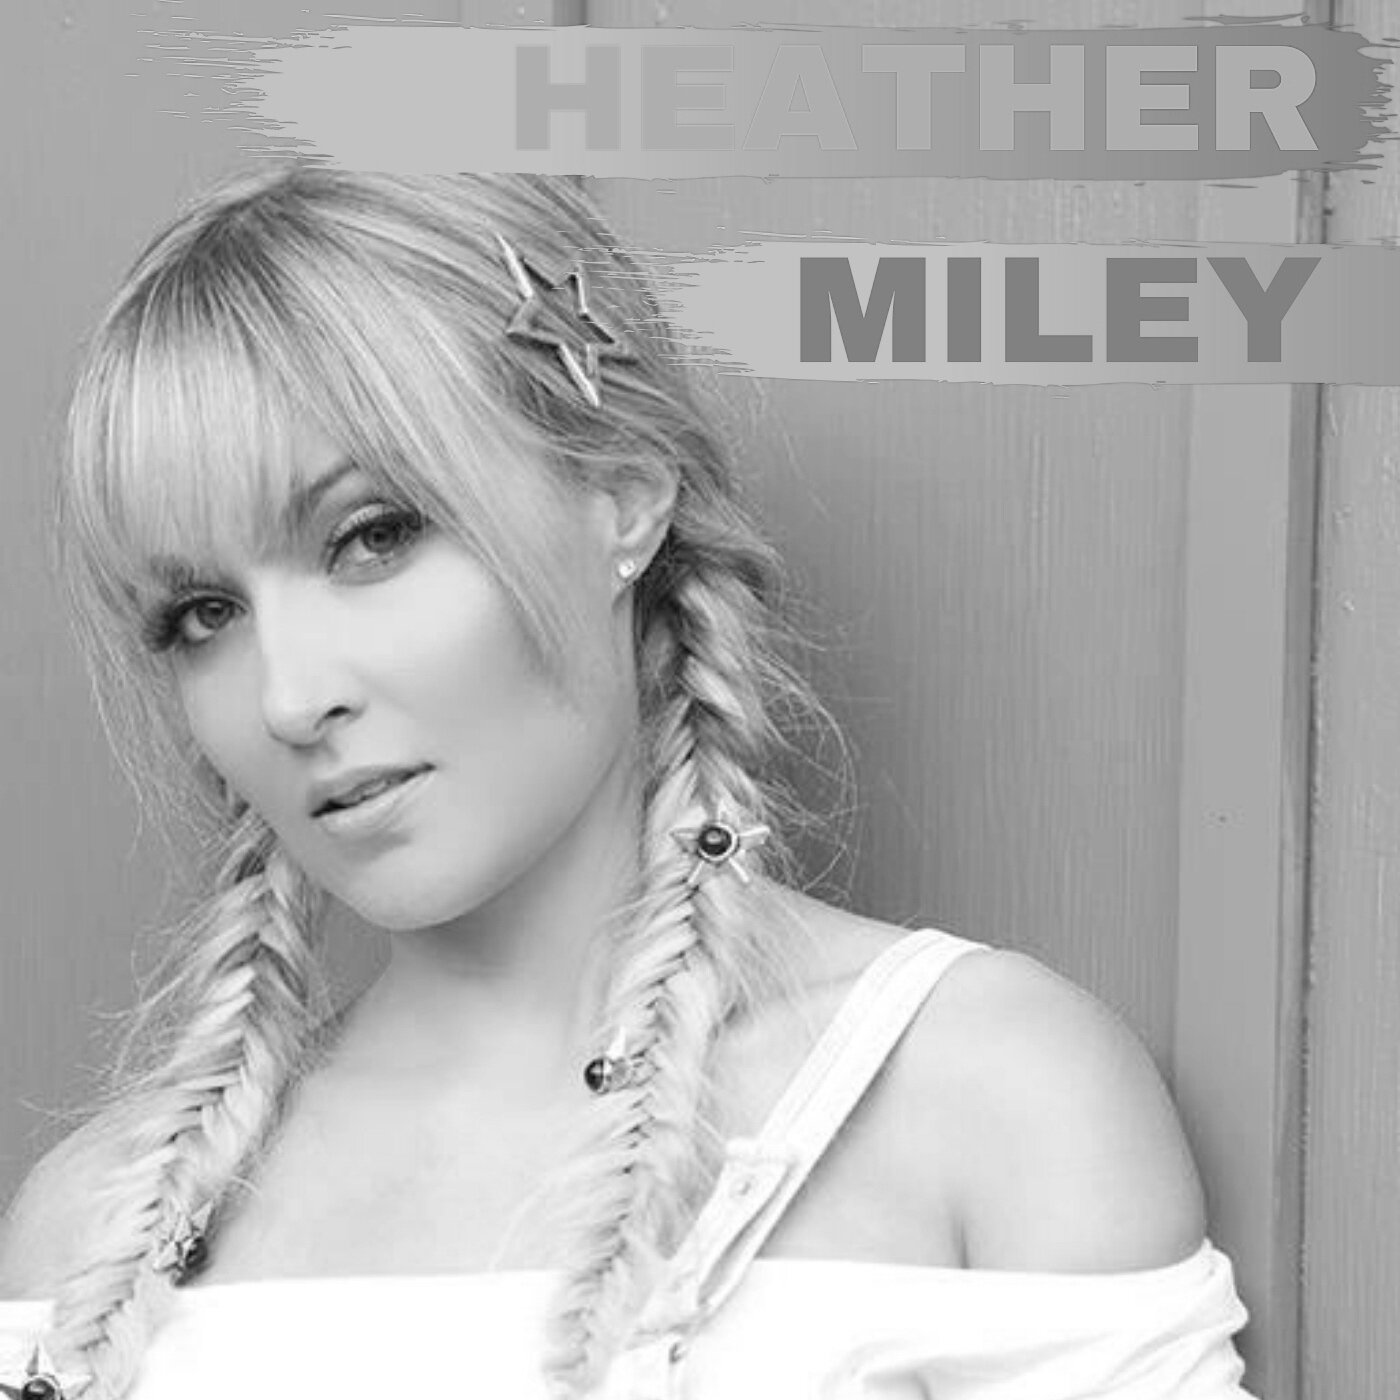 Heather Miley